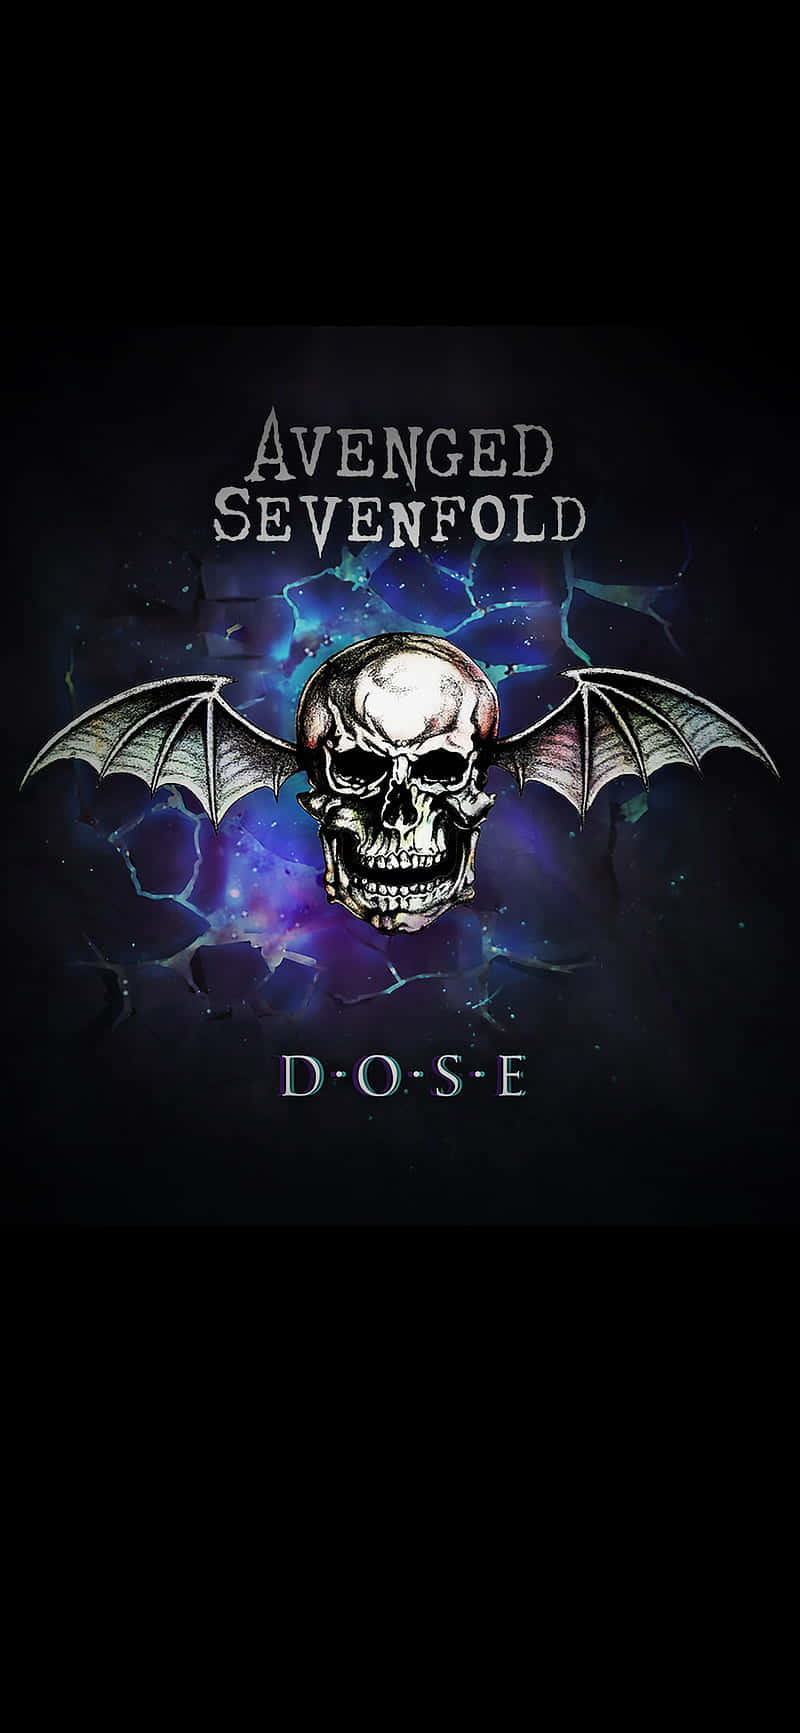 Avenged Sevenfold themed iPhone Wallpaper